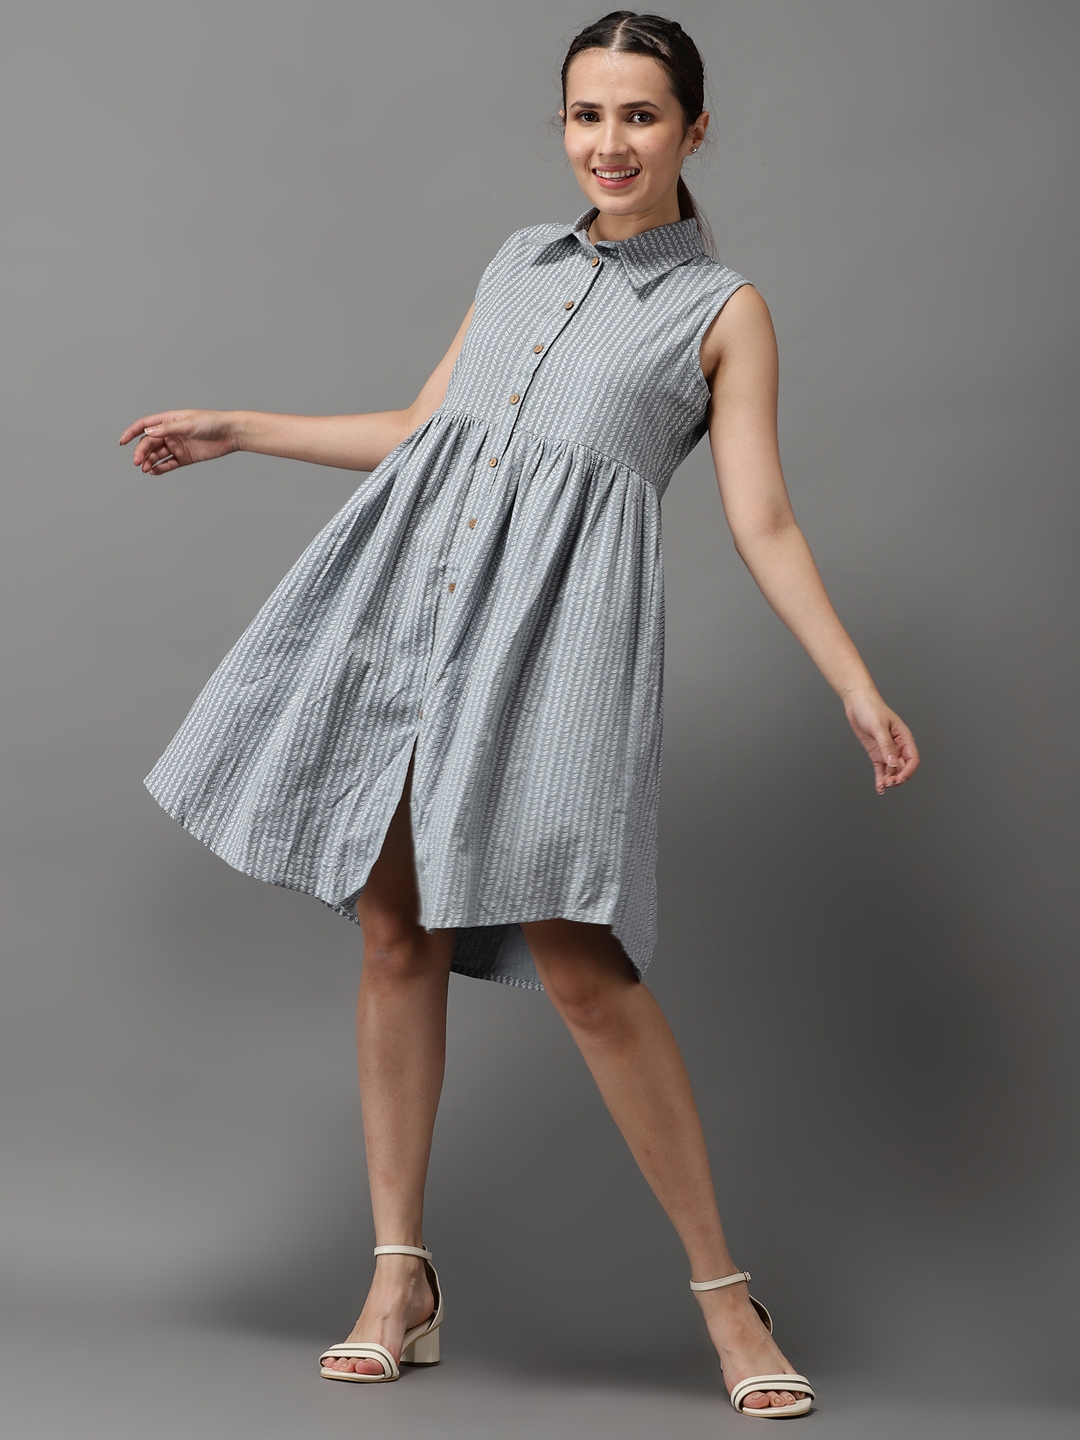 Women's Grey Cotton Printed Dresses